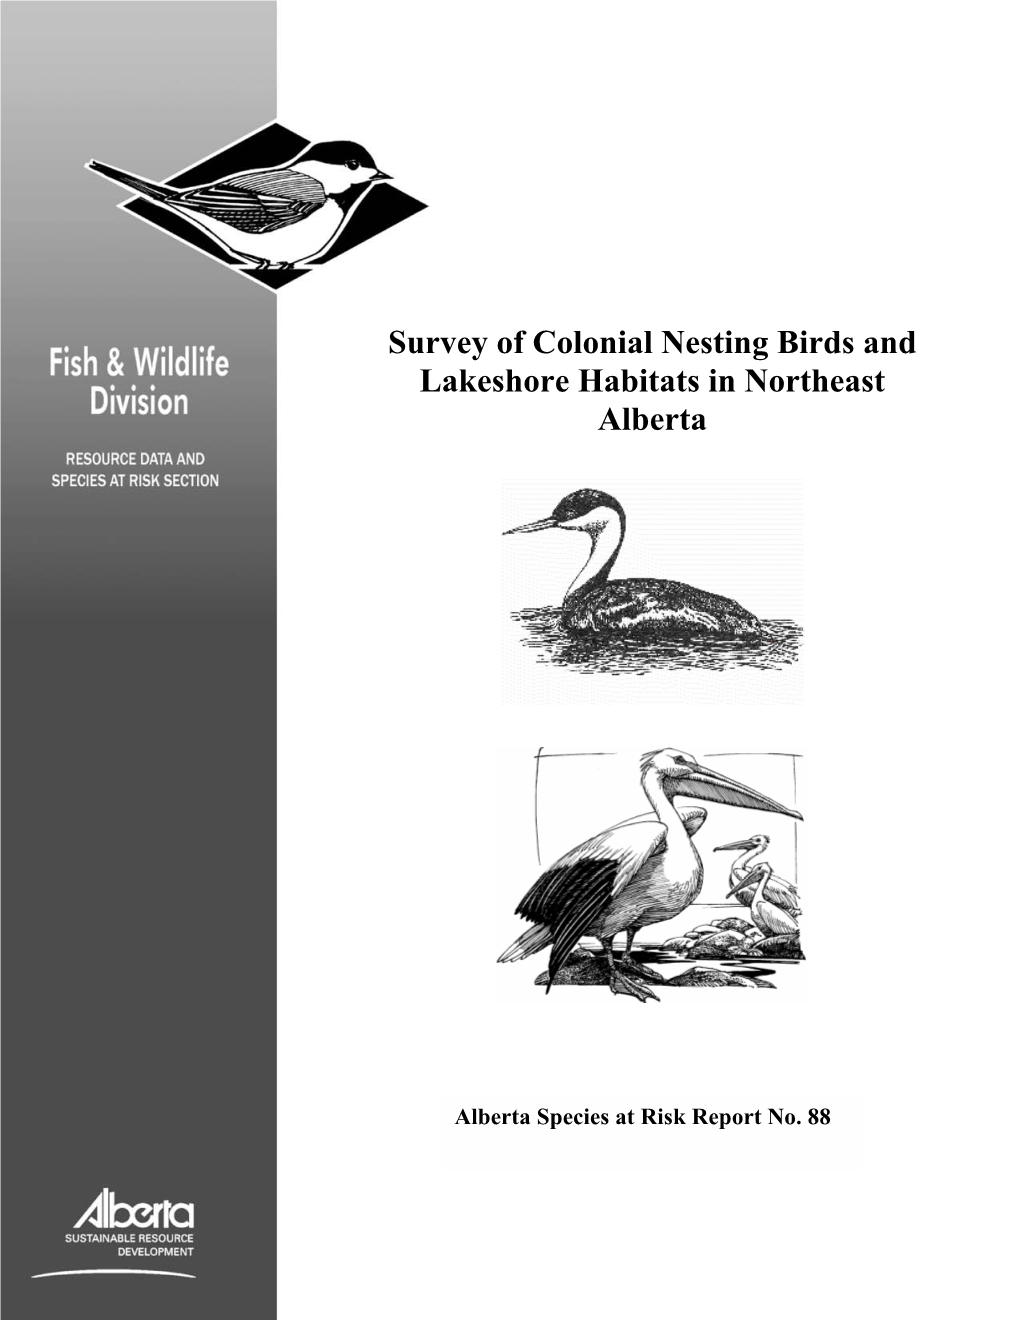 Survey of Colonial Nesting Birds and Lakeshore Habitats in Northeast Alberta